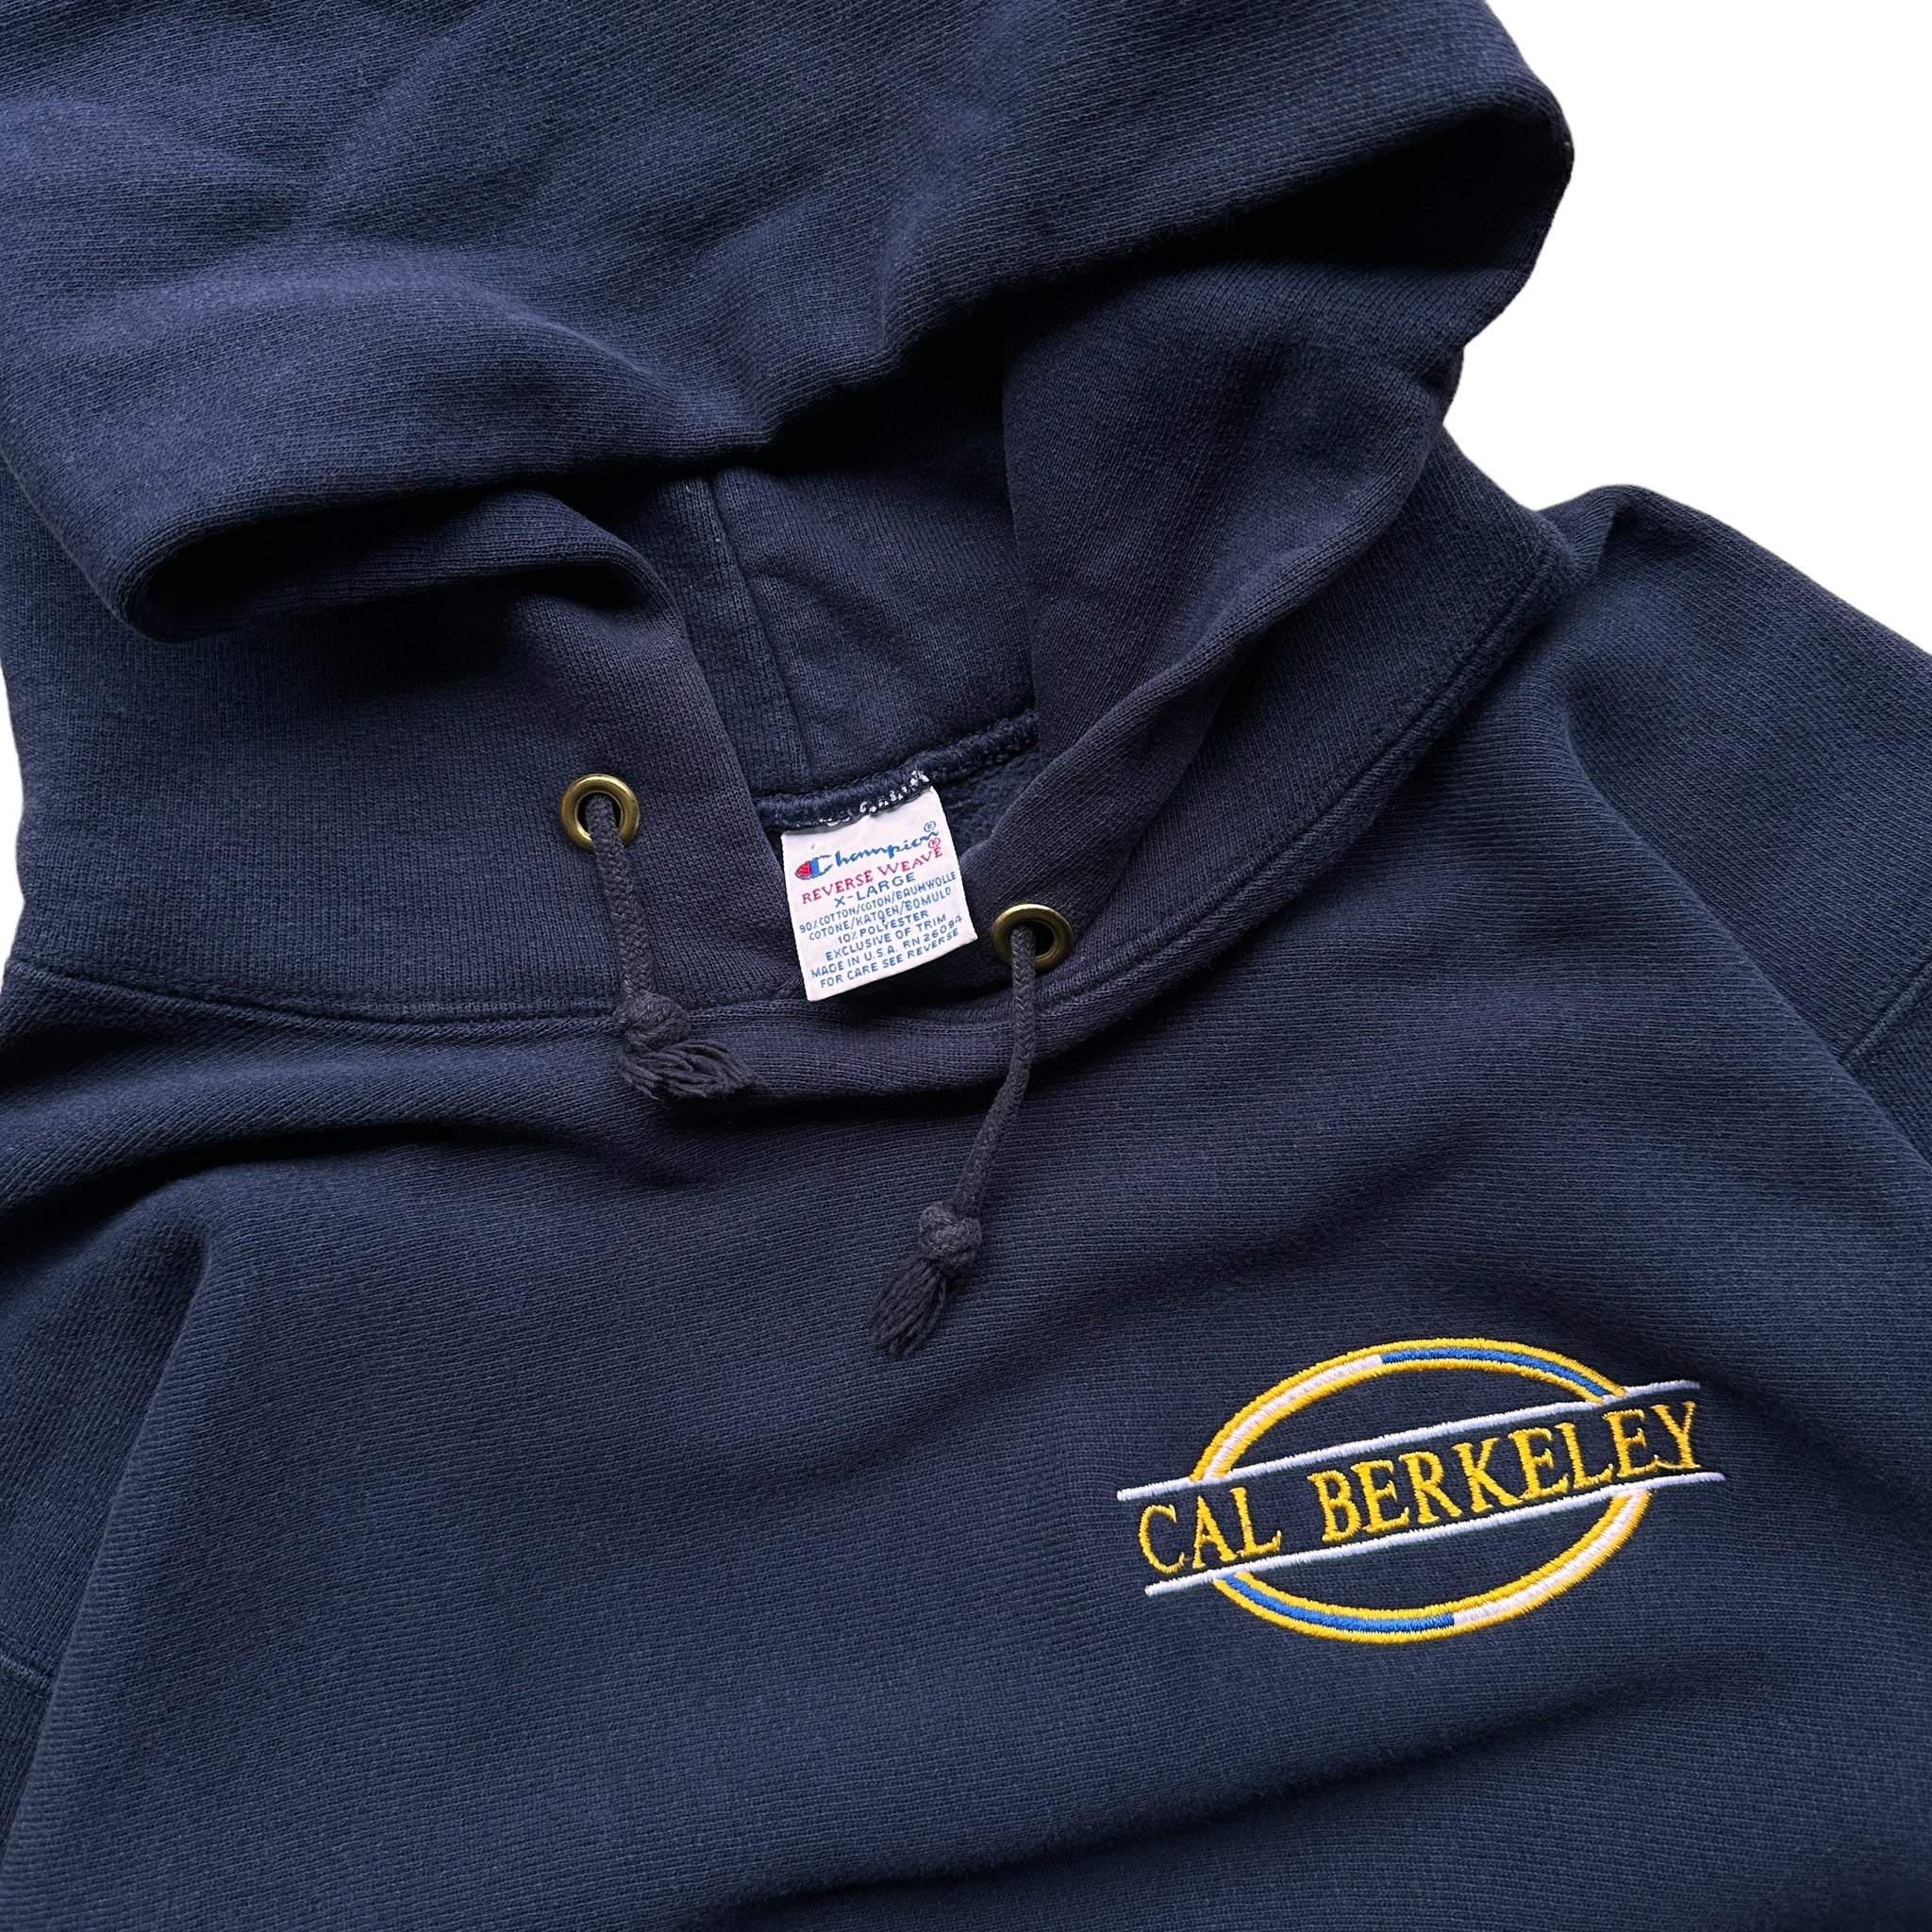 90s Champion reverse weave Cal berkeley hoodie XL